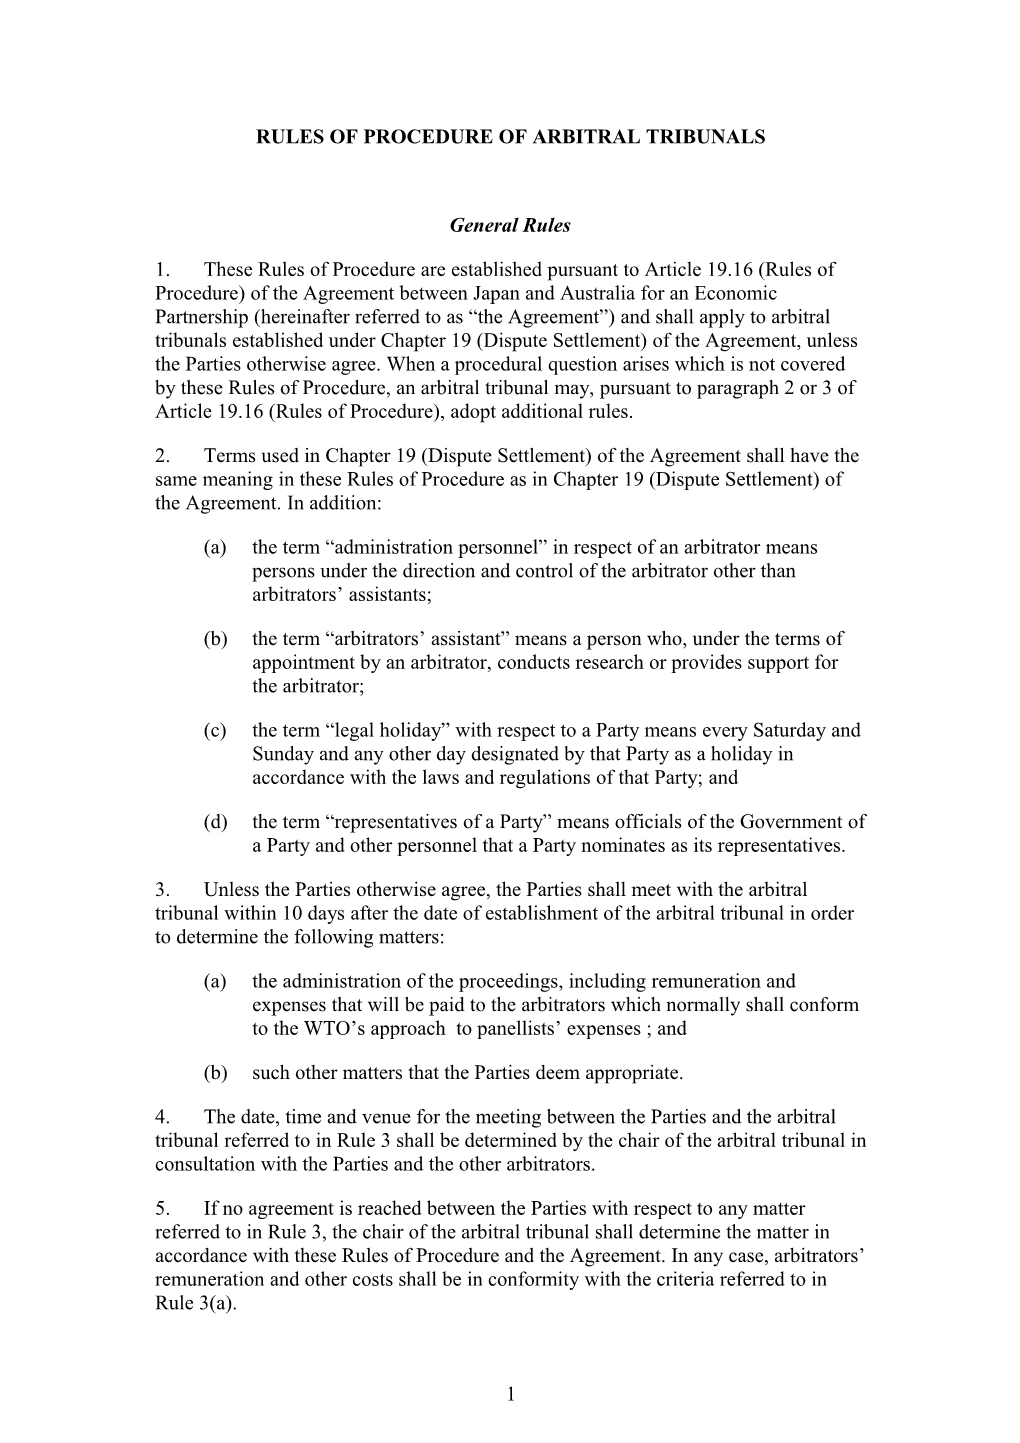 Rules of Procedure of Arbitral Tribunals